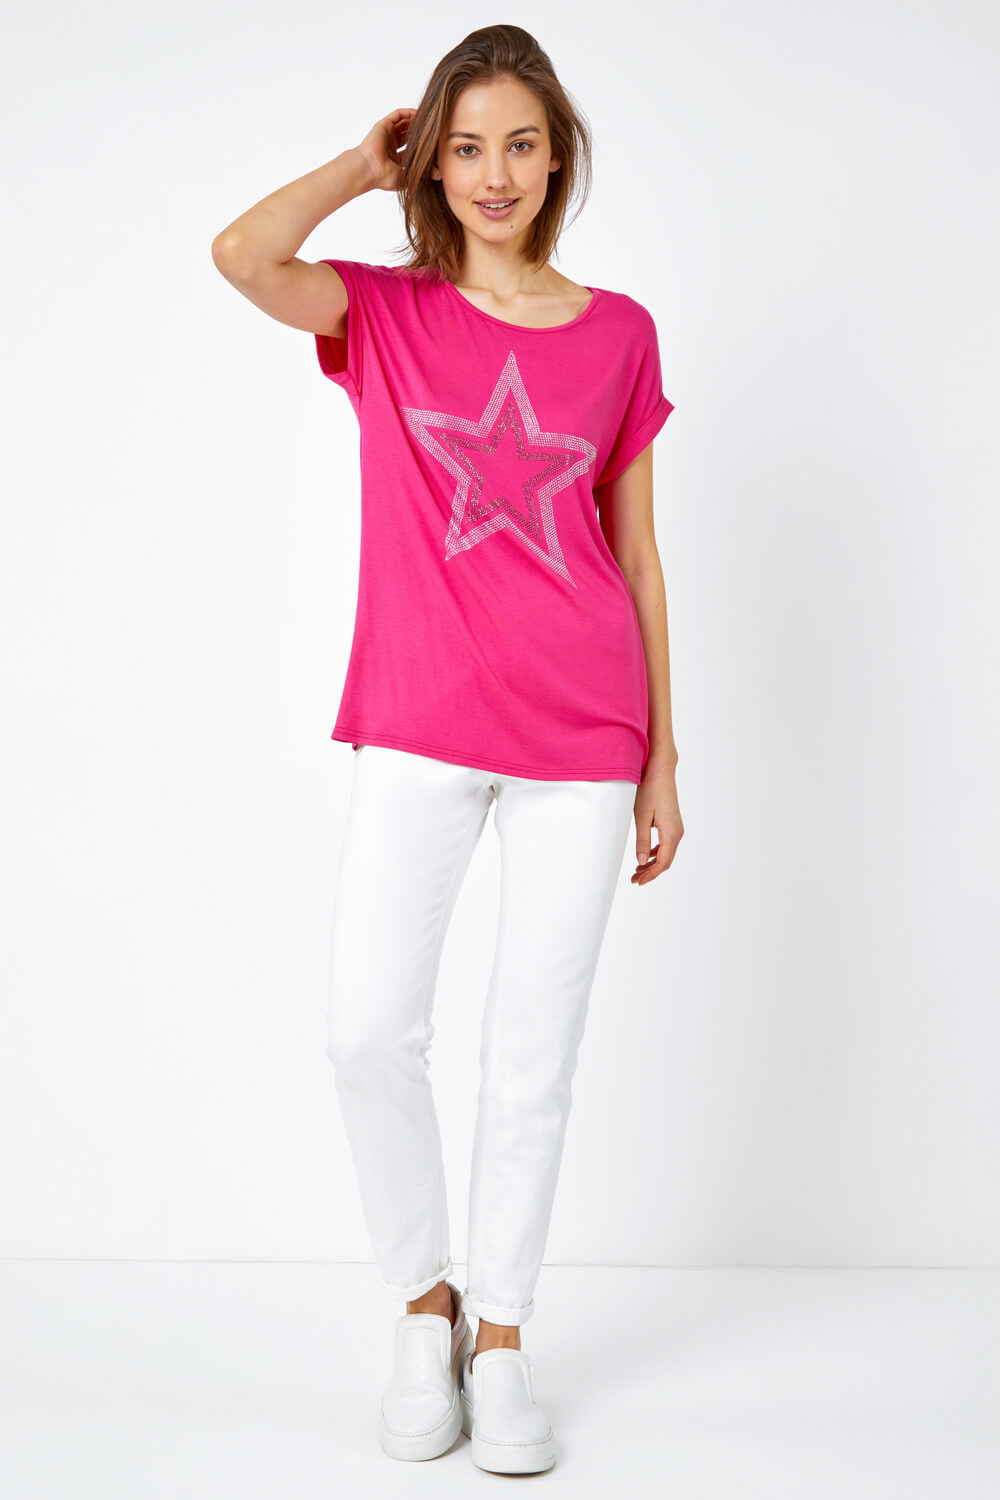 PINK Embellished Star Print T-Shirt , Image 4 of 5